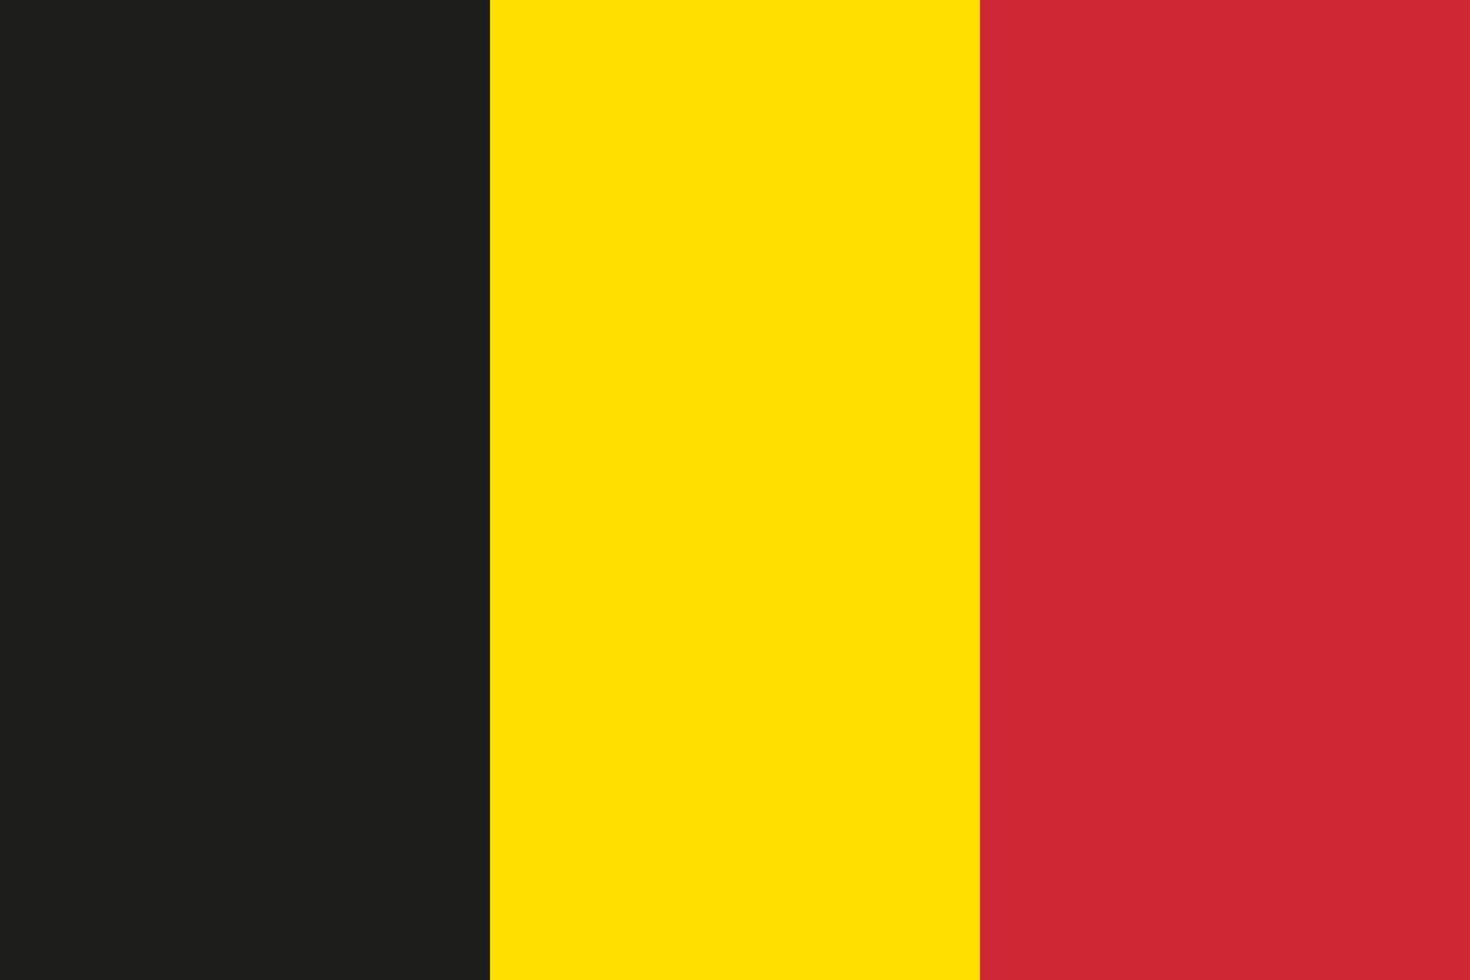 Belgian flag vector icon. The flag of Belgium